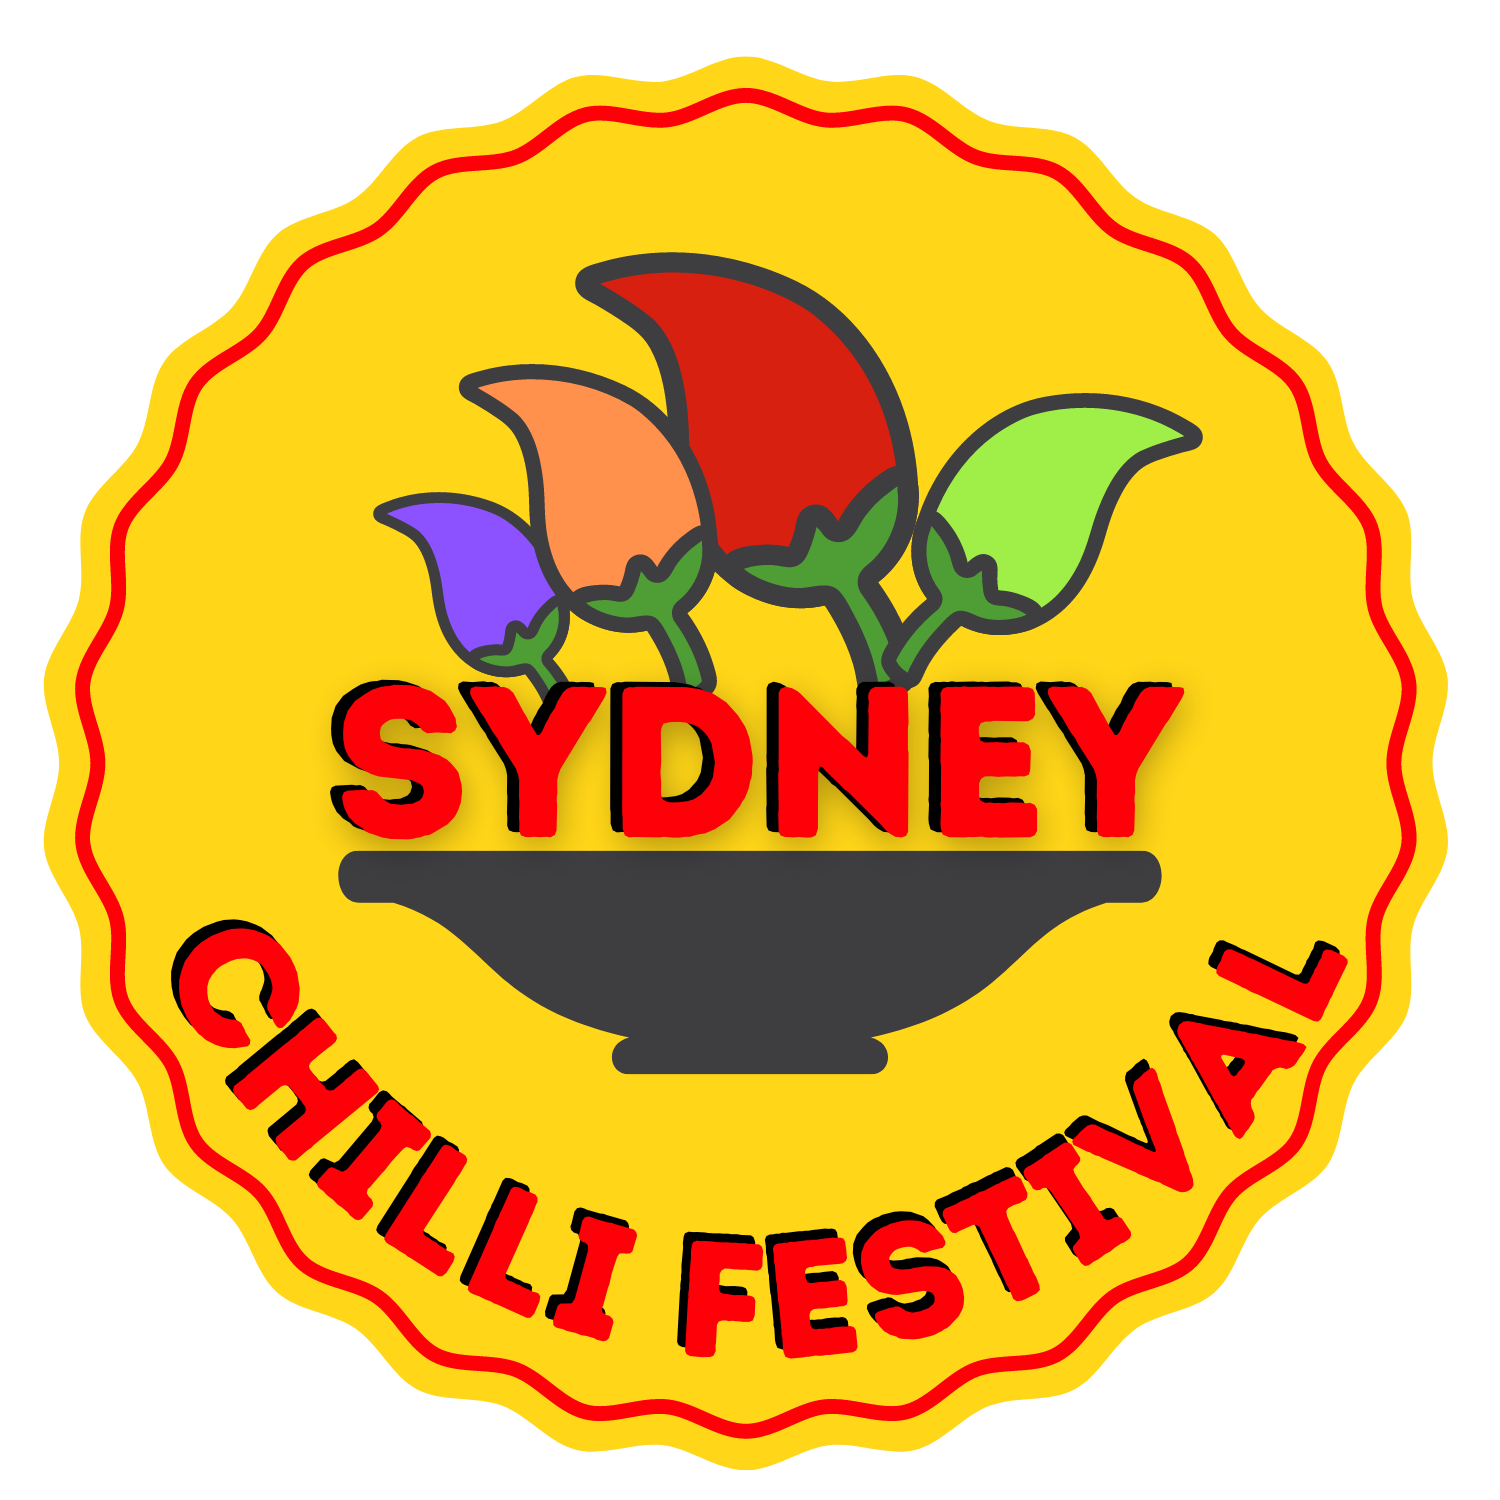 The Sydney Chilli Fest